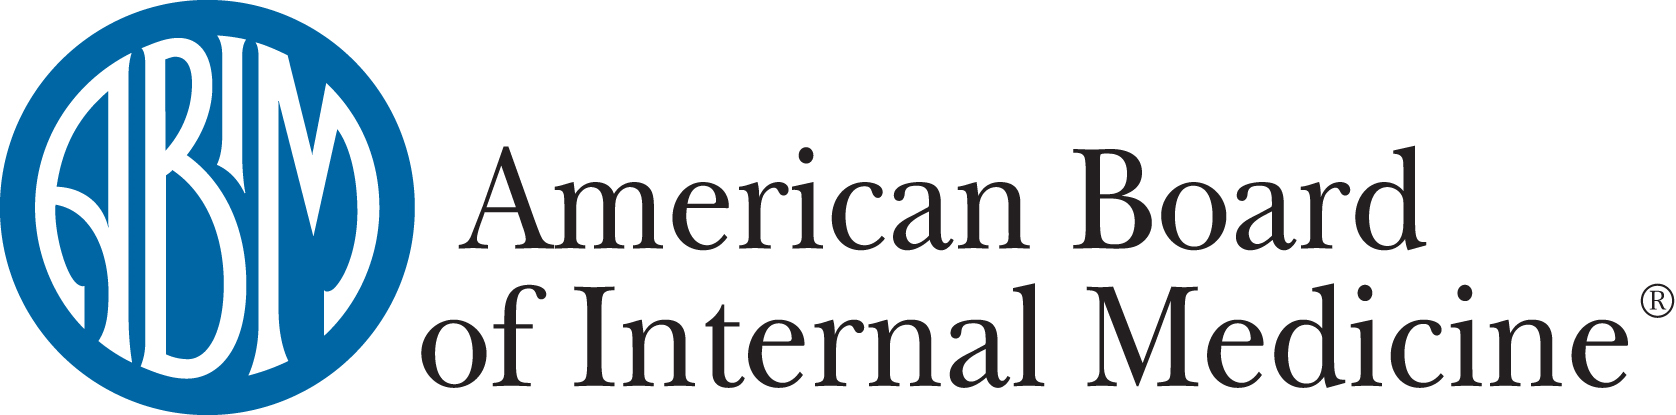 American Board of Internal Medicine logo